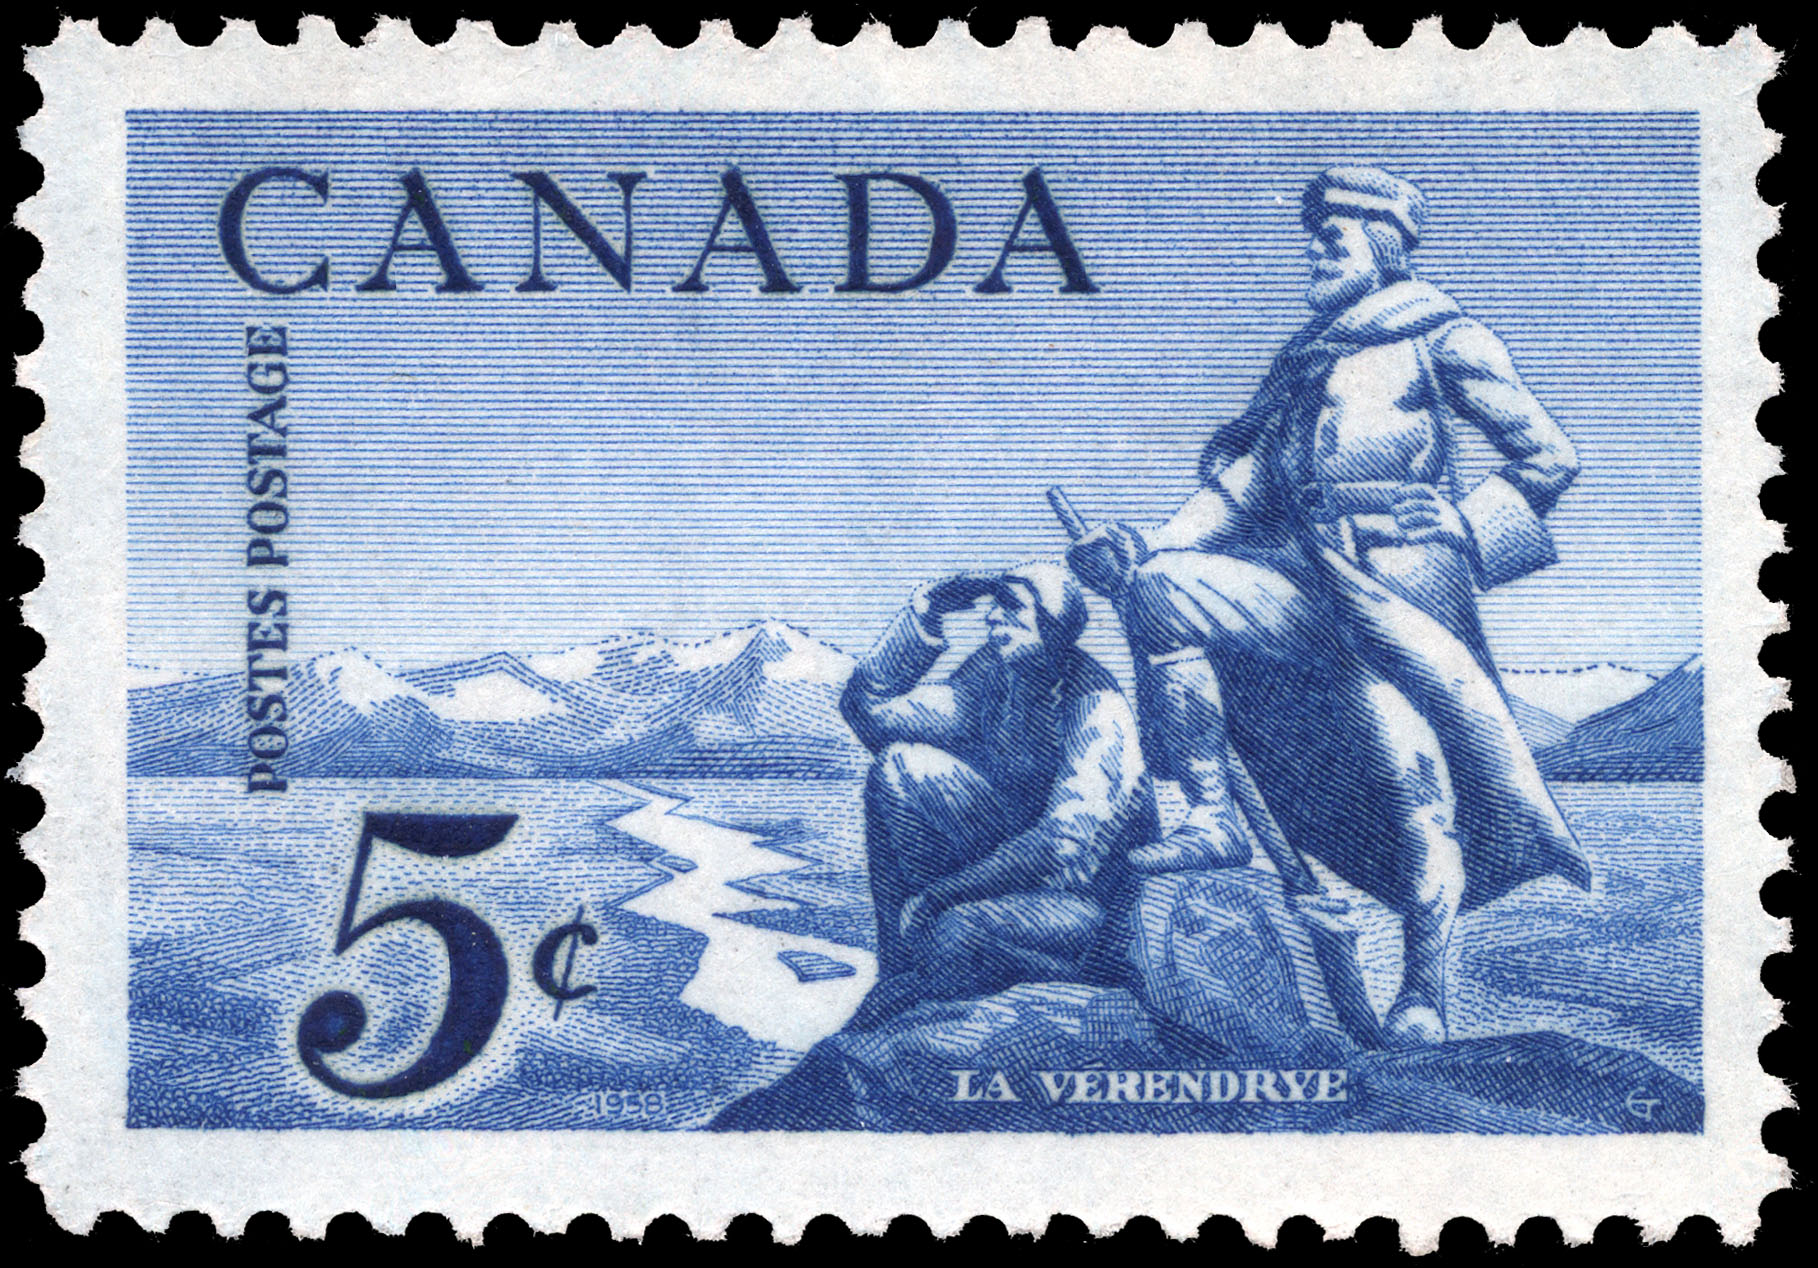 La Verendrye - Canada Postage Stamp